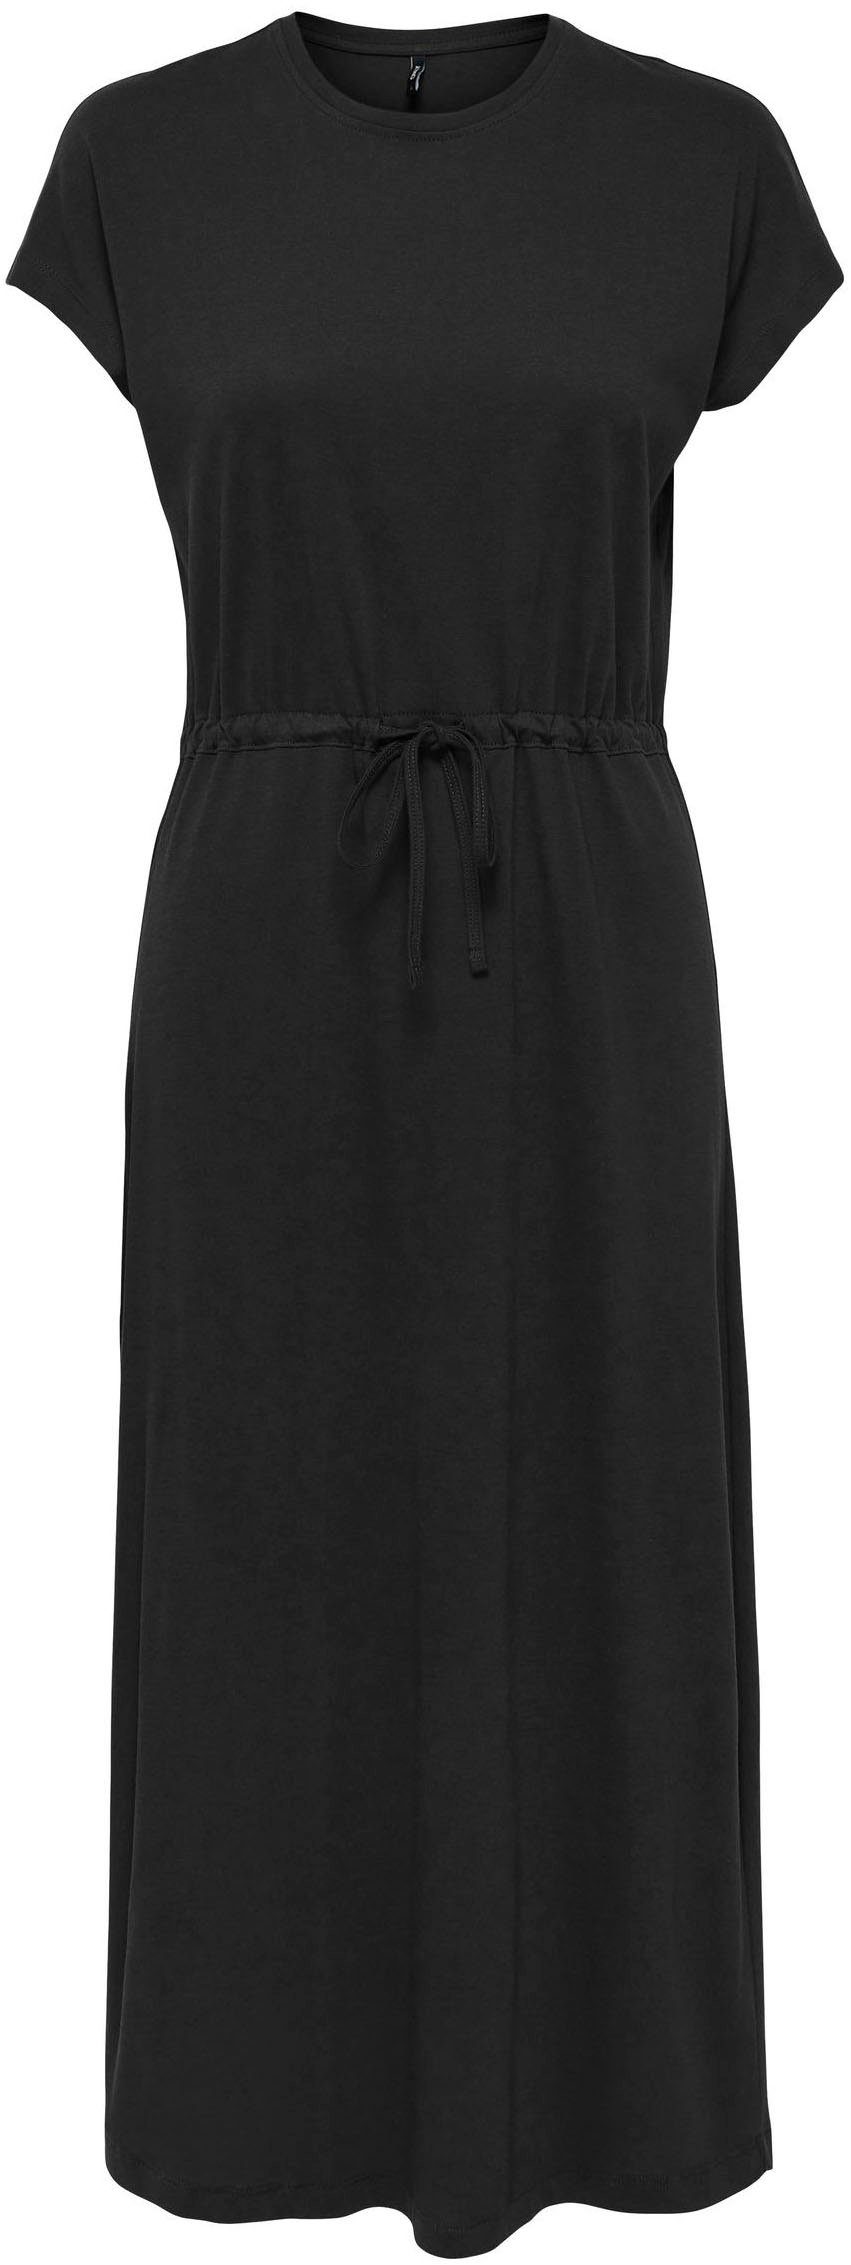 ONLY Jerseykleid ONLMAY S/S MIDI STRIPE DRESS In Streifen Optik Black | Sommerkleider